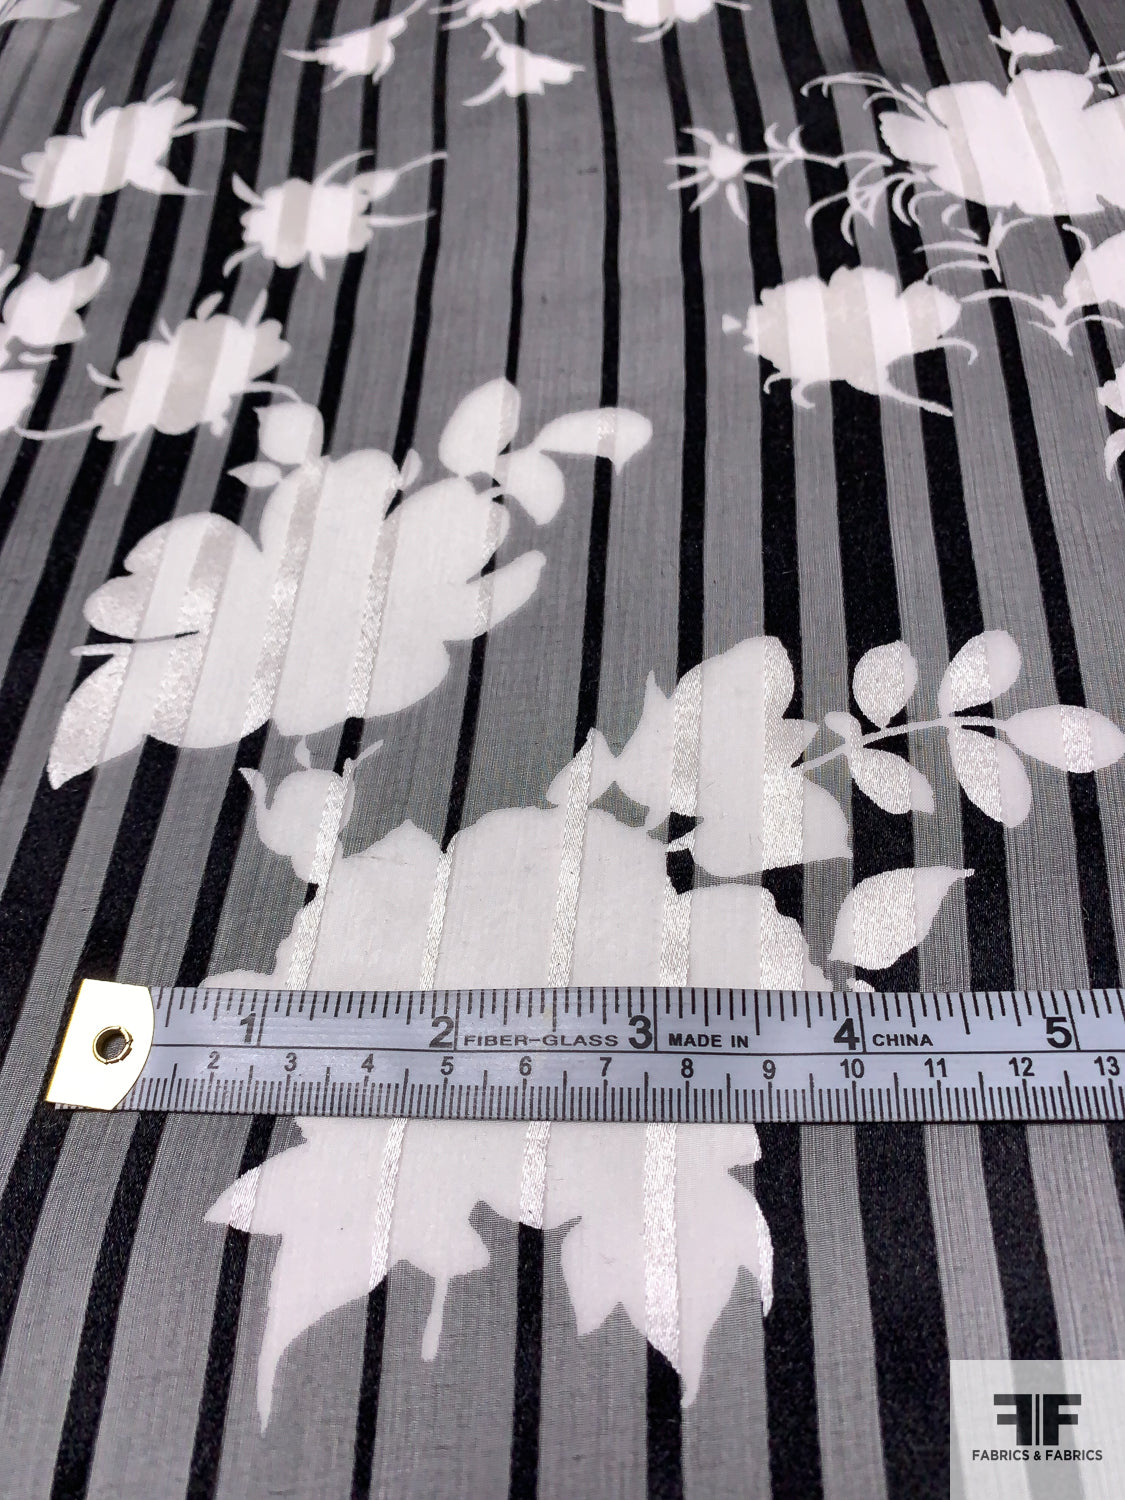 Floral Silhouette Printed Silk Chiffon - Black / White  Black and white  fabric, Silk printing, Black and white